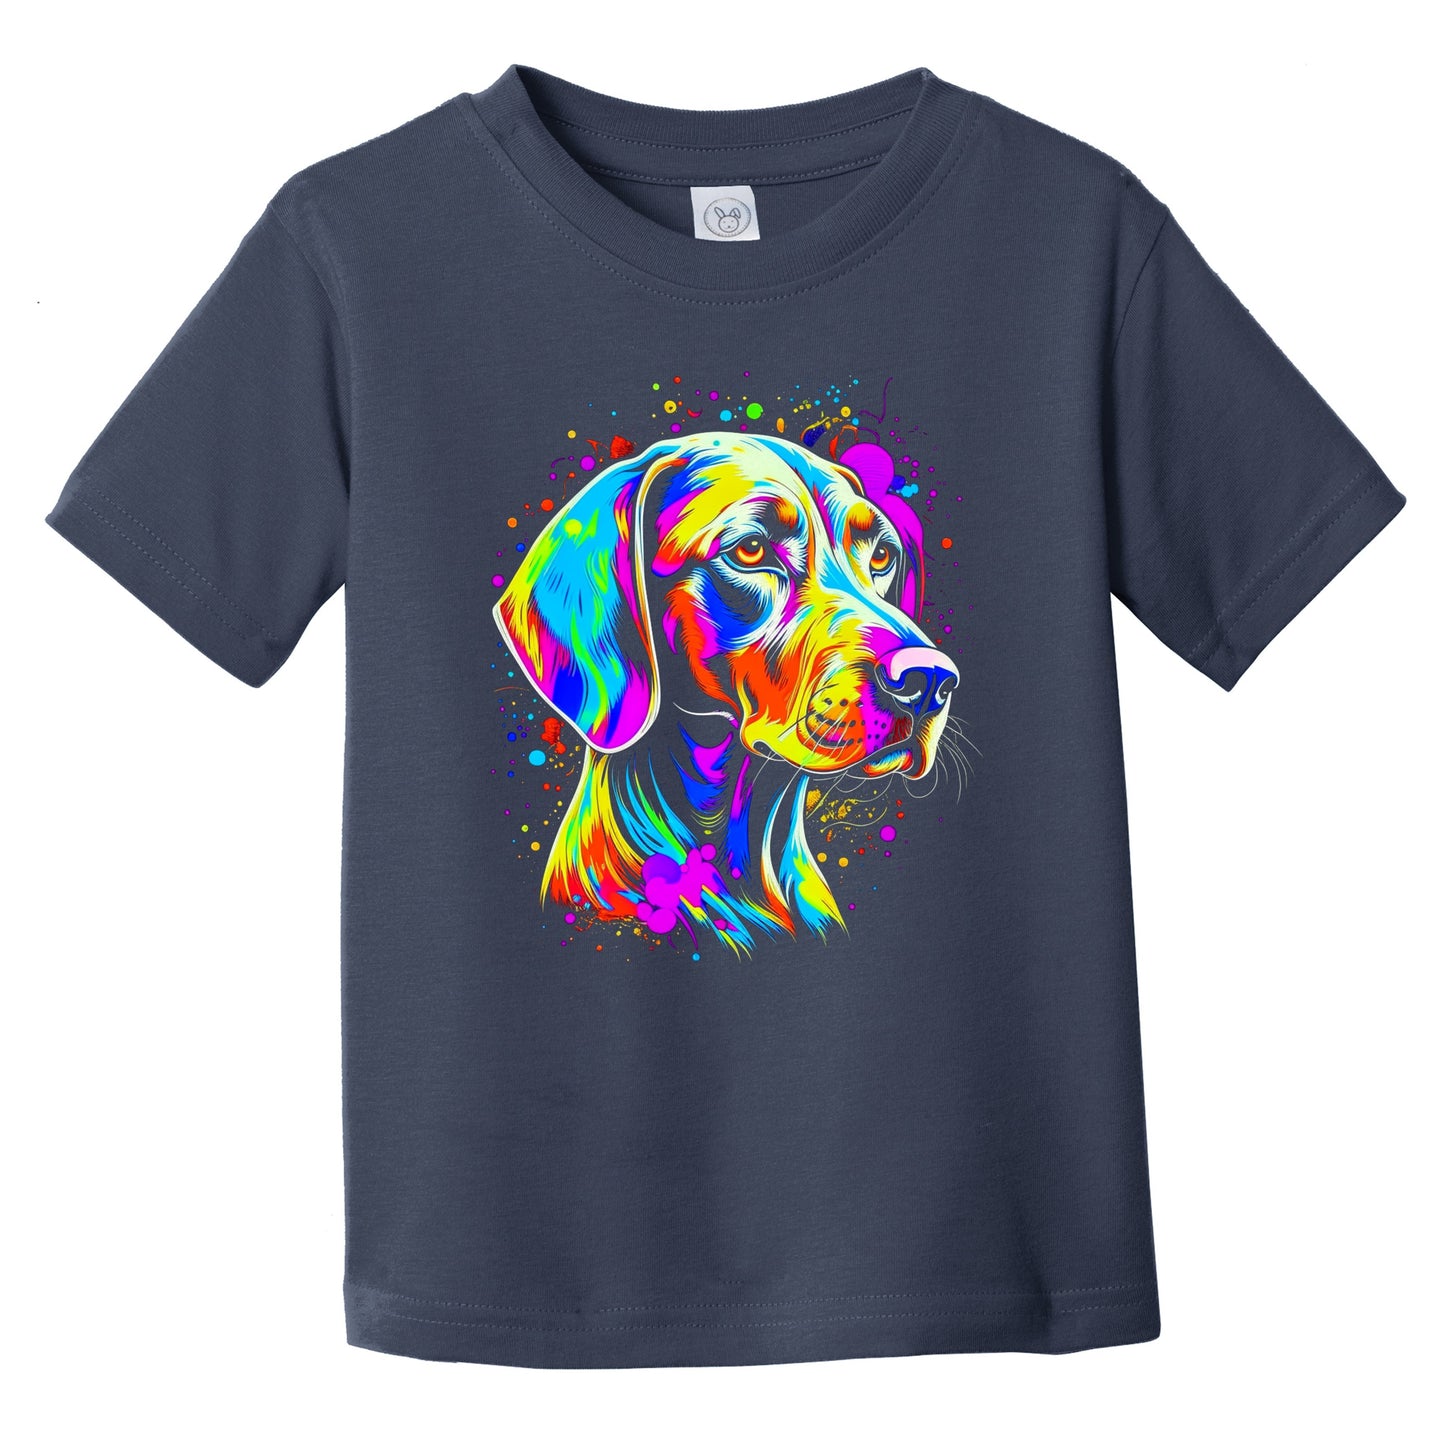 Colorful Bright Weimaraner Vibrant Psychedelic Dog Art Infant Toddler T-Shirt